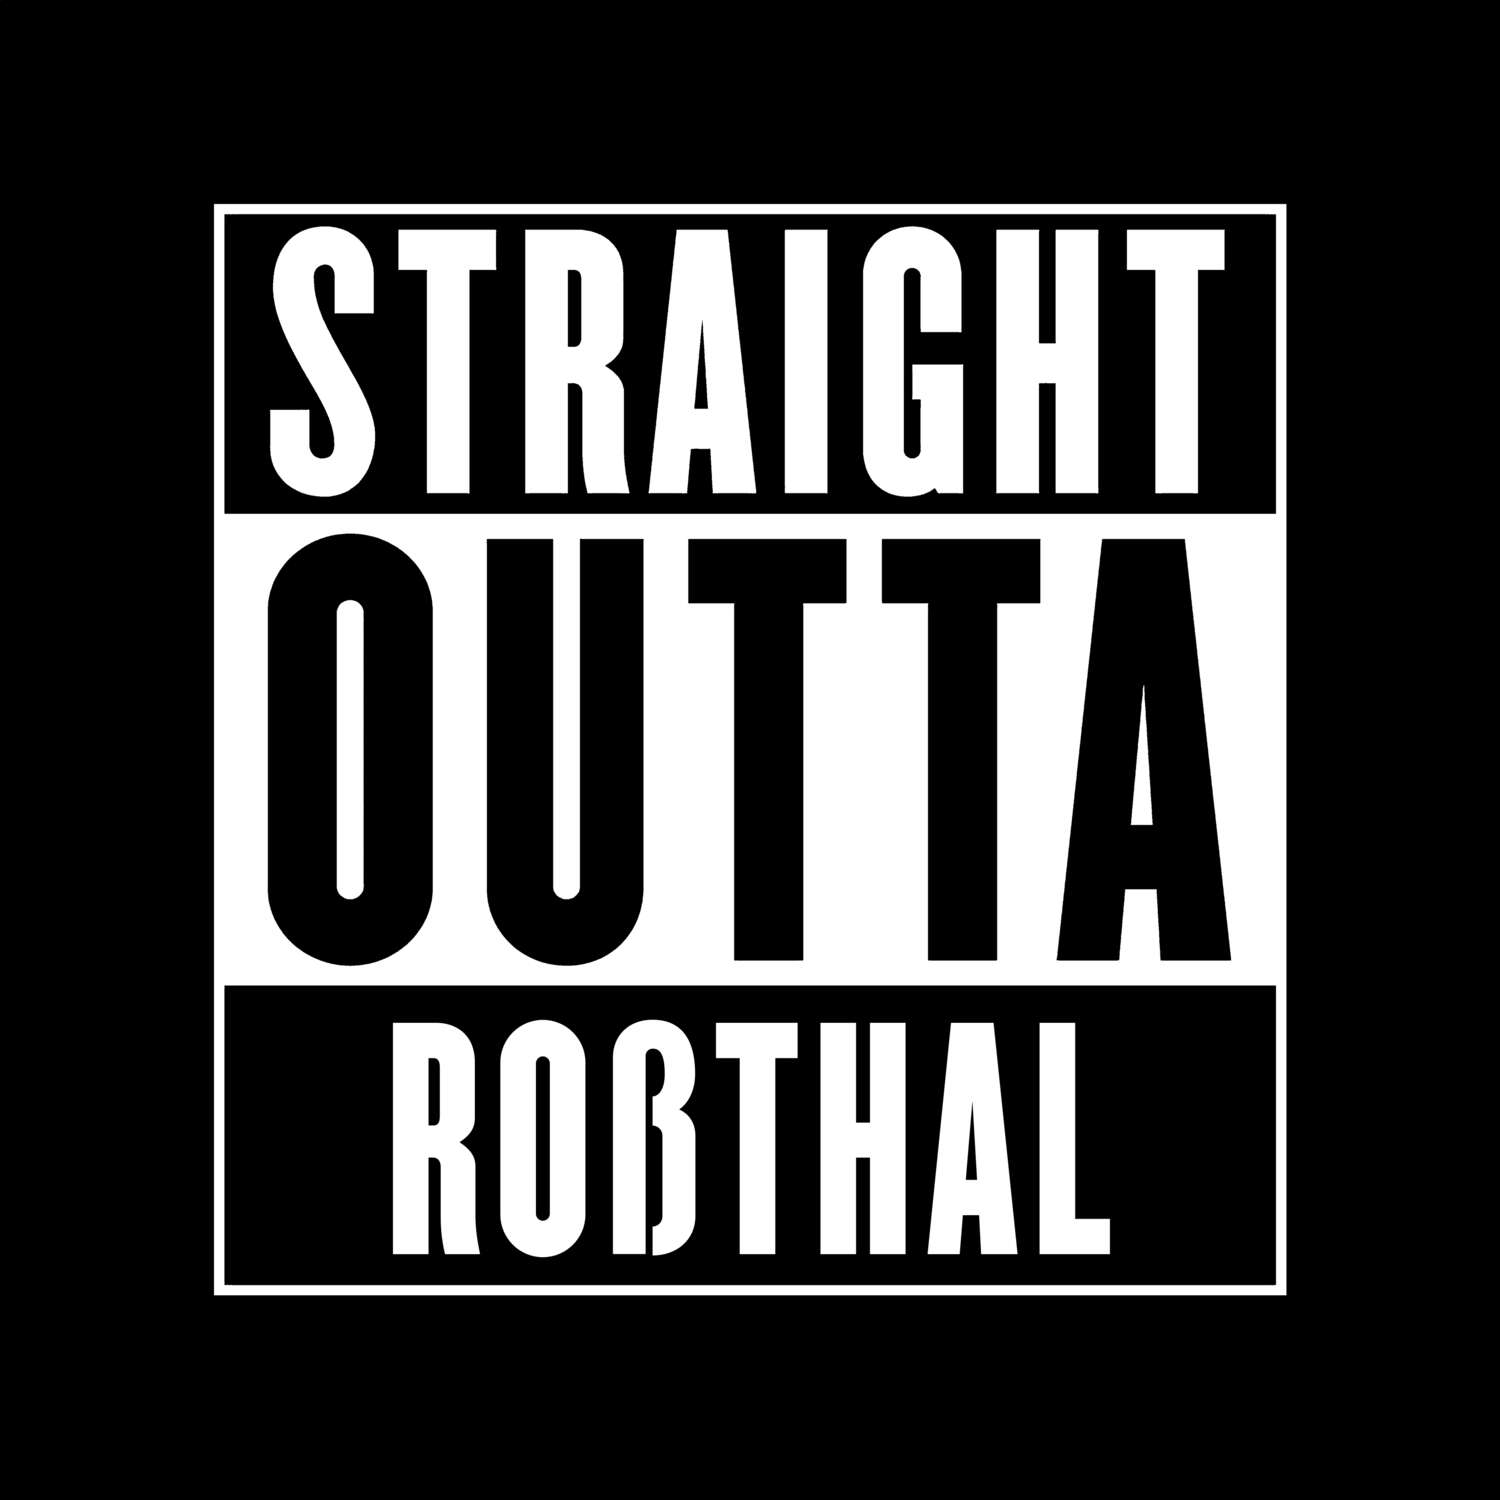 Roßthal T-Shirt »Straight Outta«